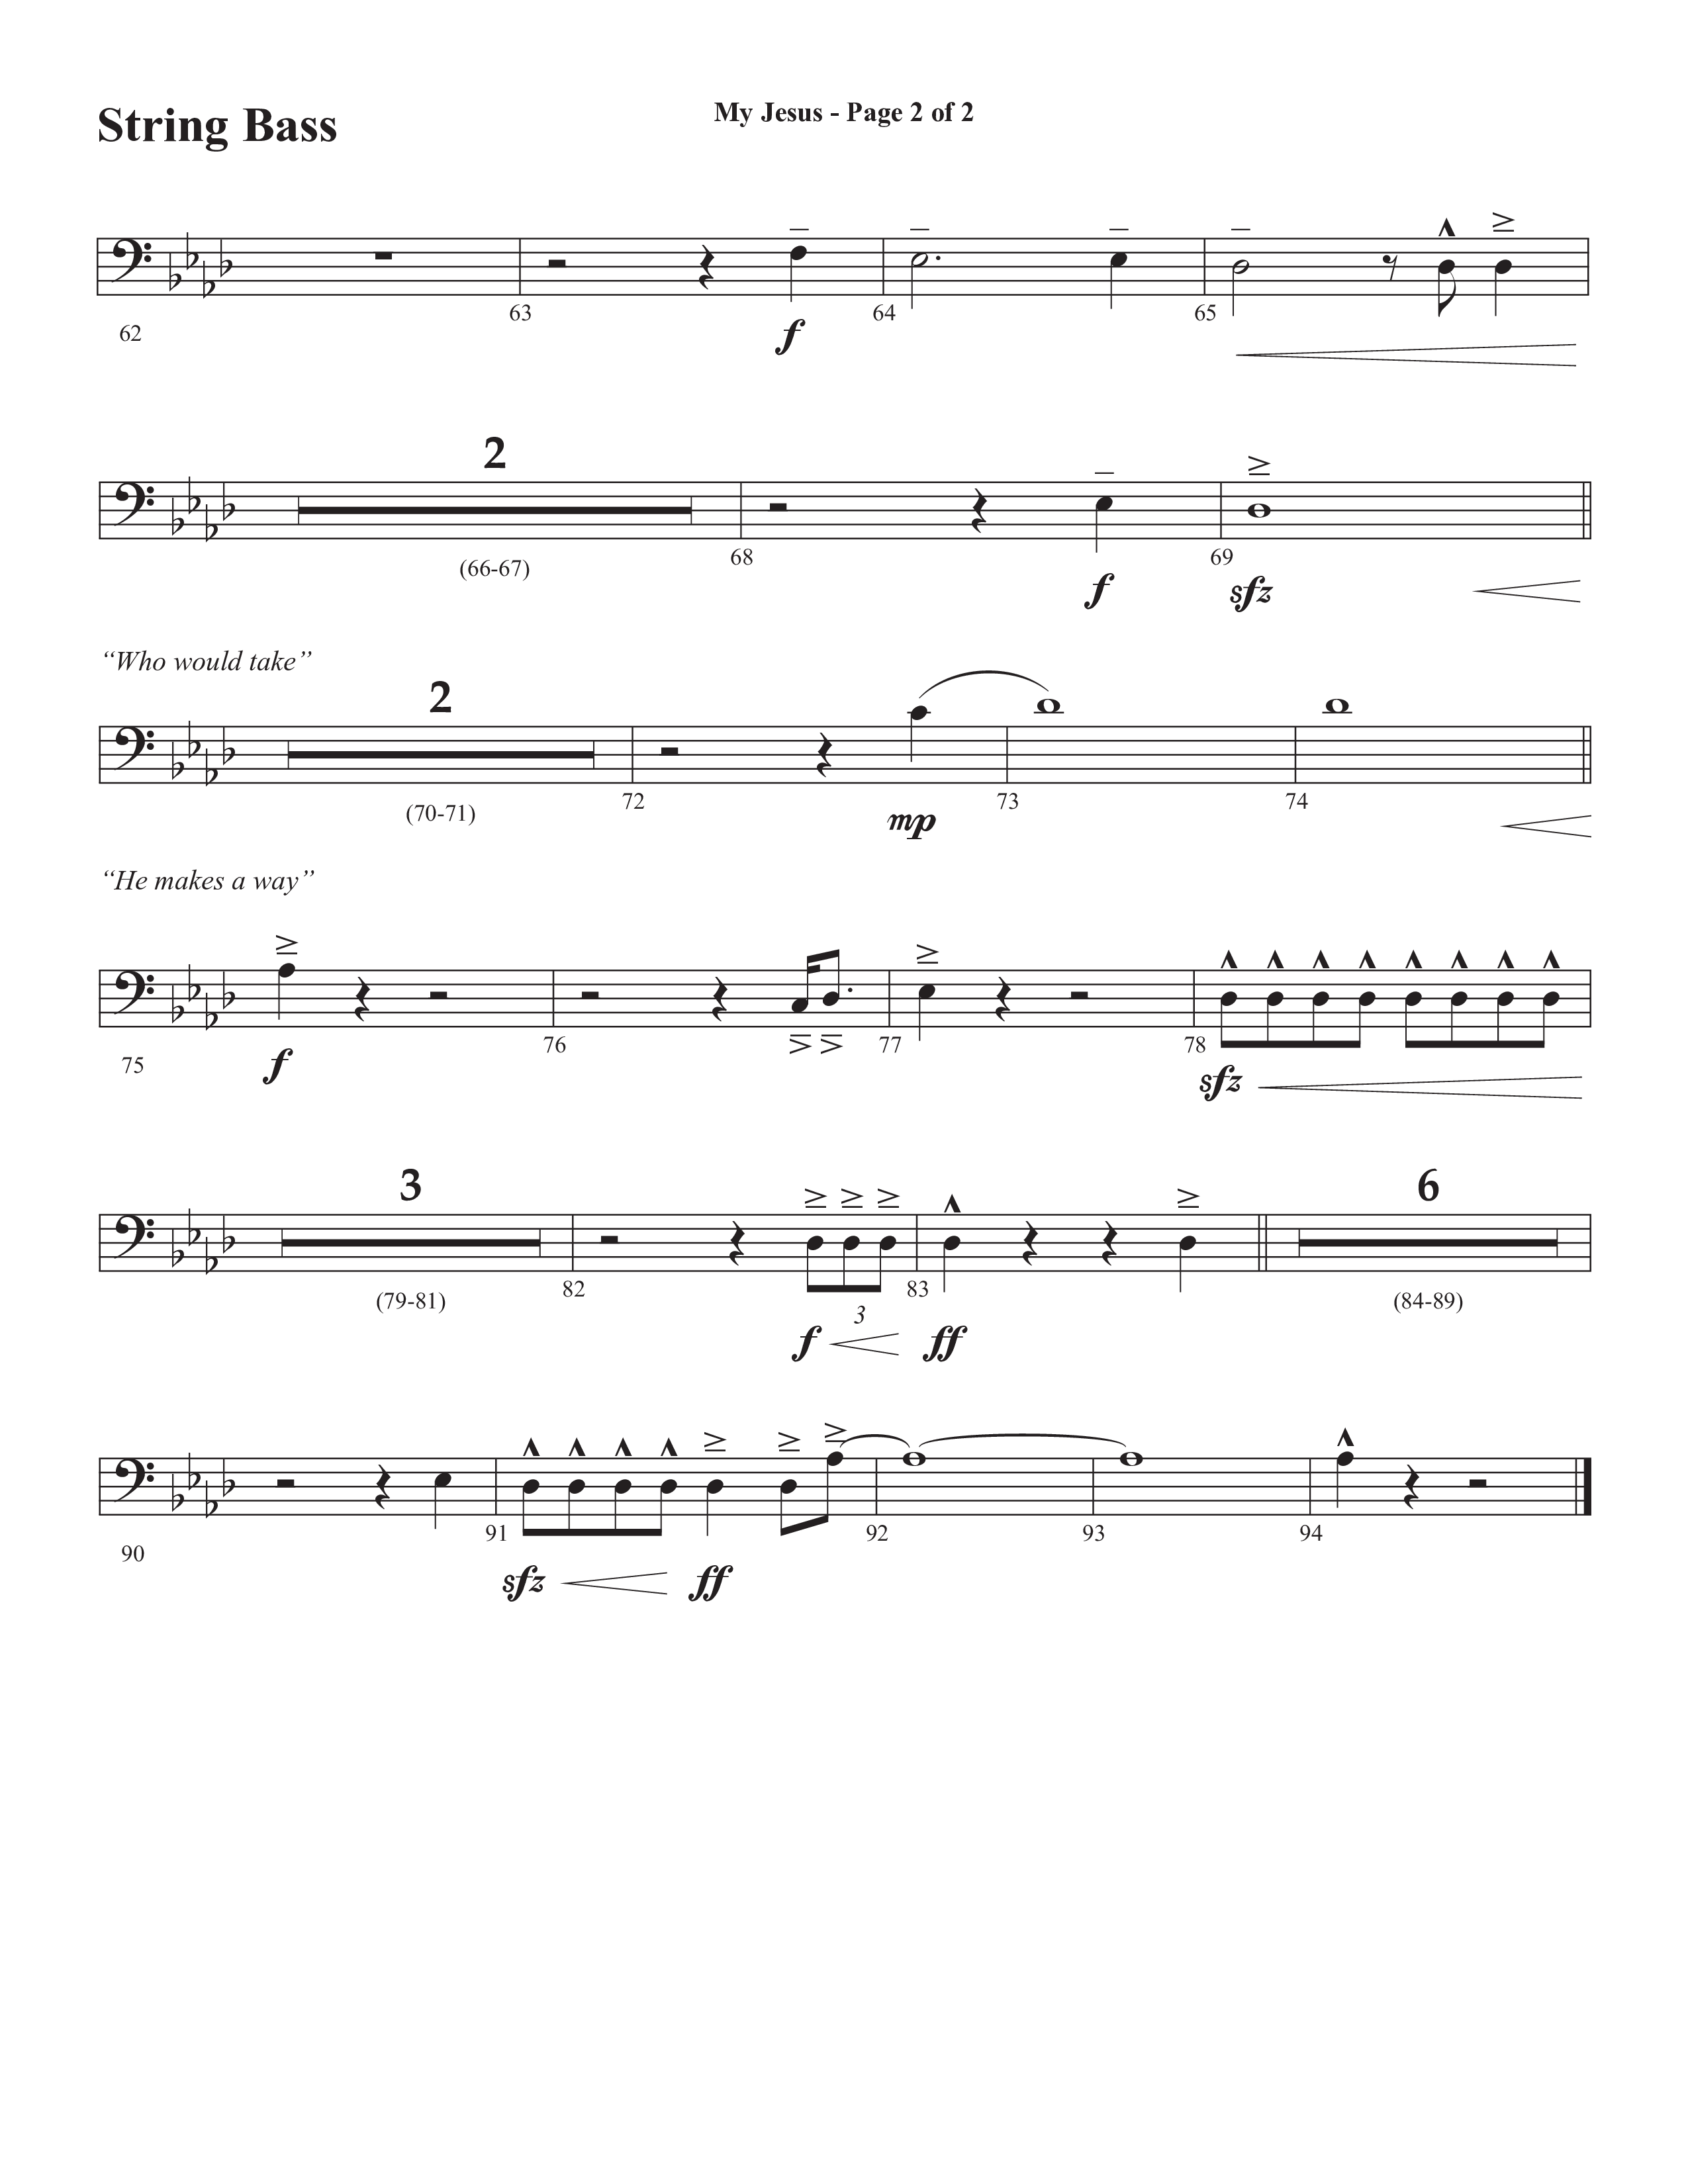 My Jesus (with My Jesus I Love Thee) (Choral Anthem SATB) String Bass (Semsen Music / Arr. Cliff Duren)